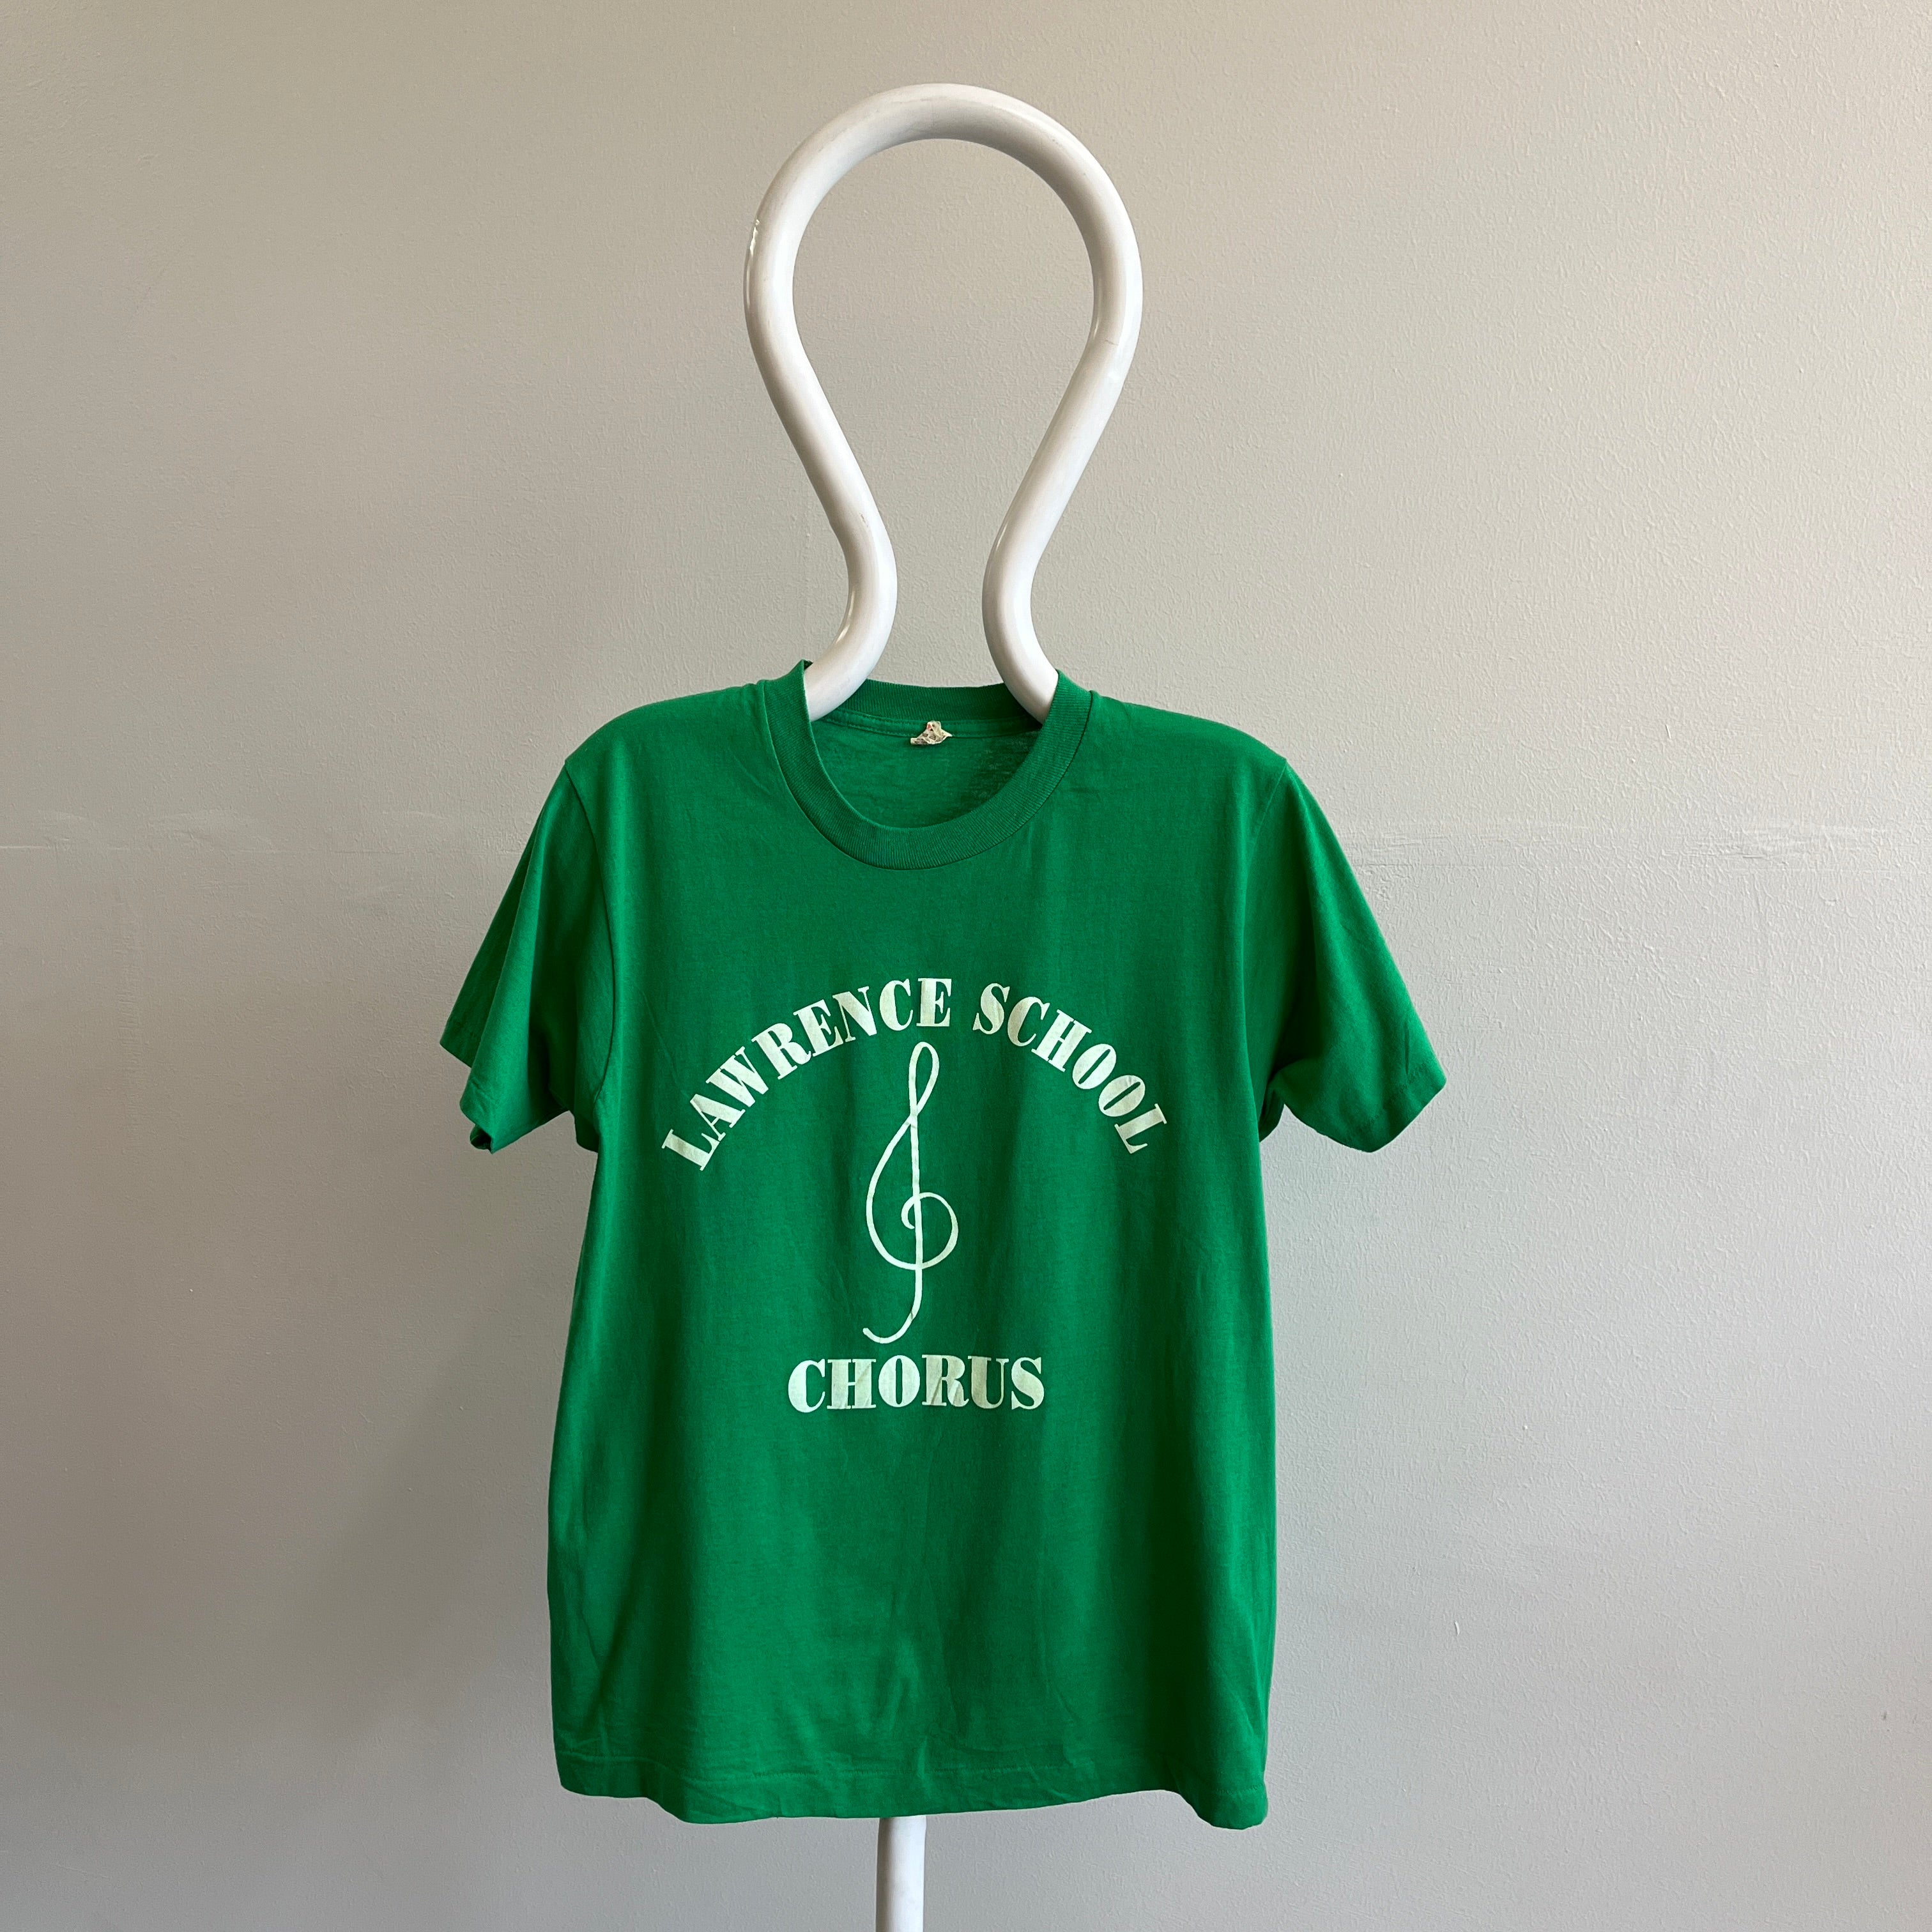 1980s Lawrence School Chorus by Screen Stars T-Shirt